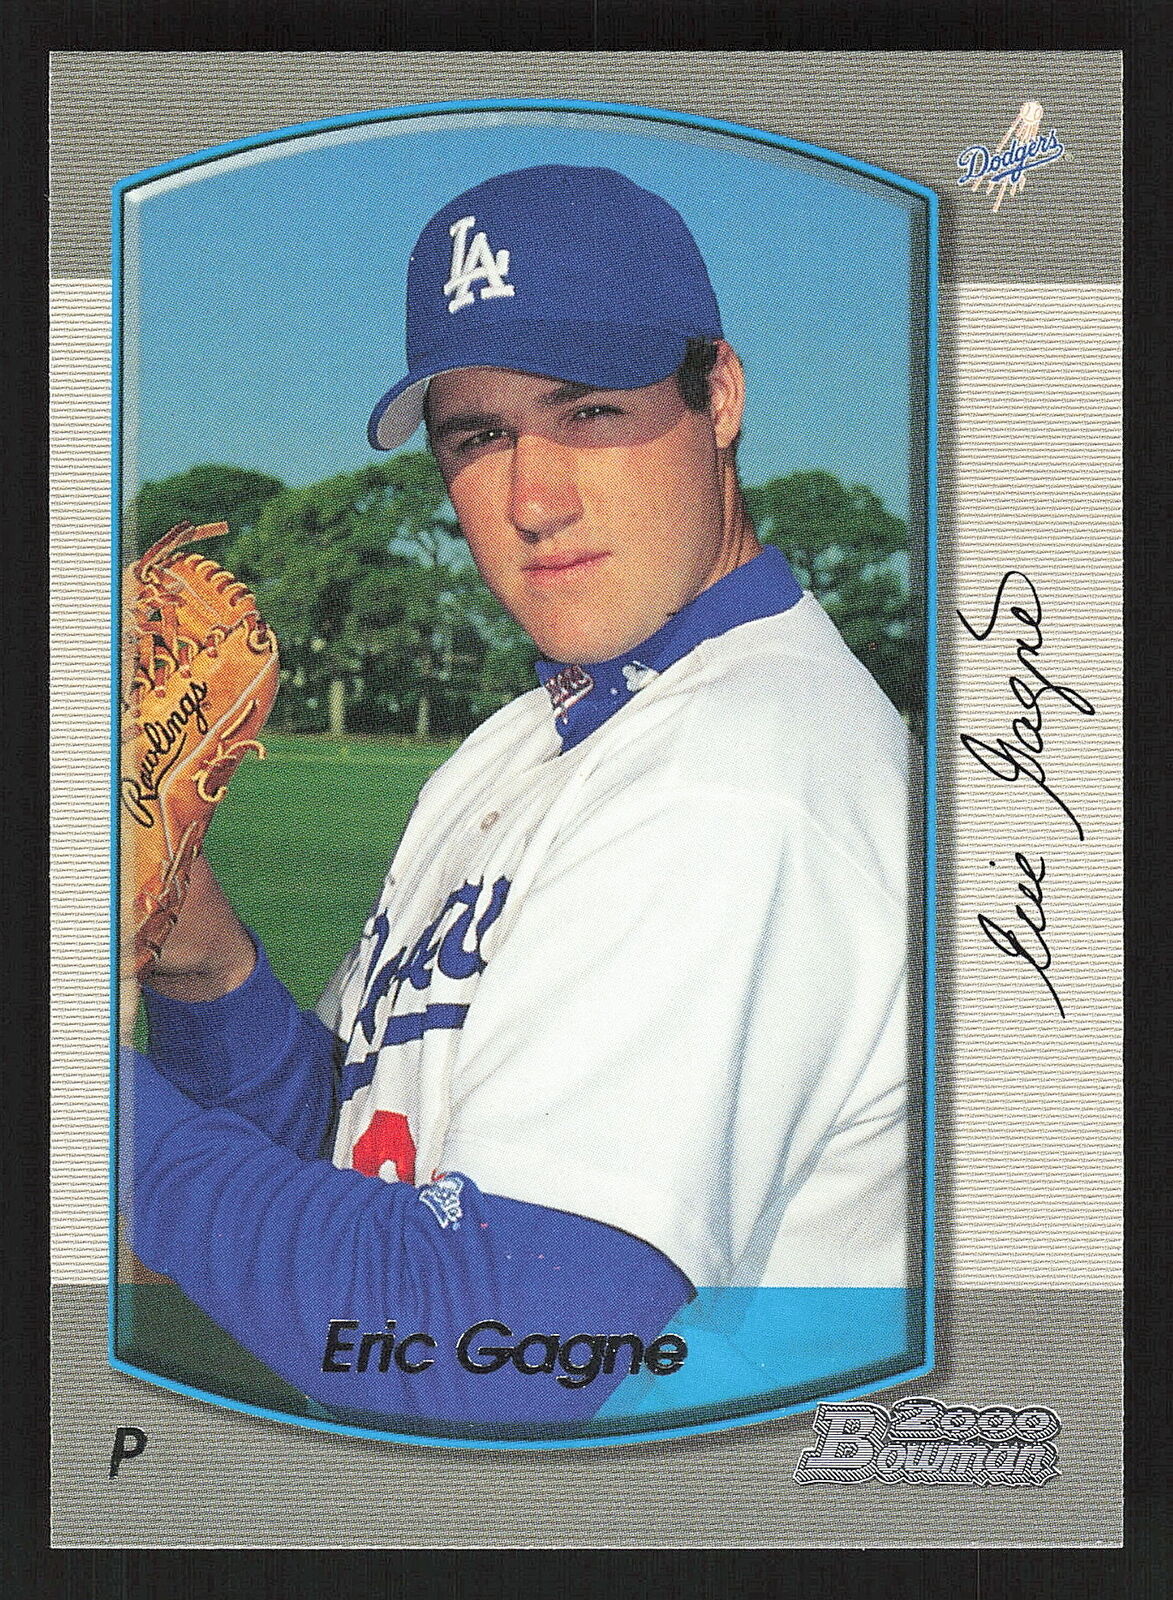 2000 Bowman Eric Gagne #397 Los Angeles Dodgers